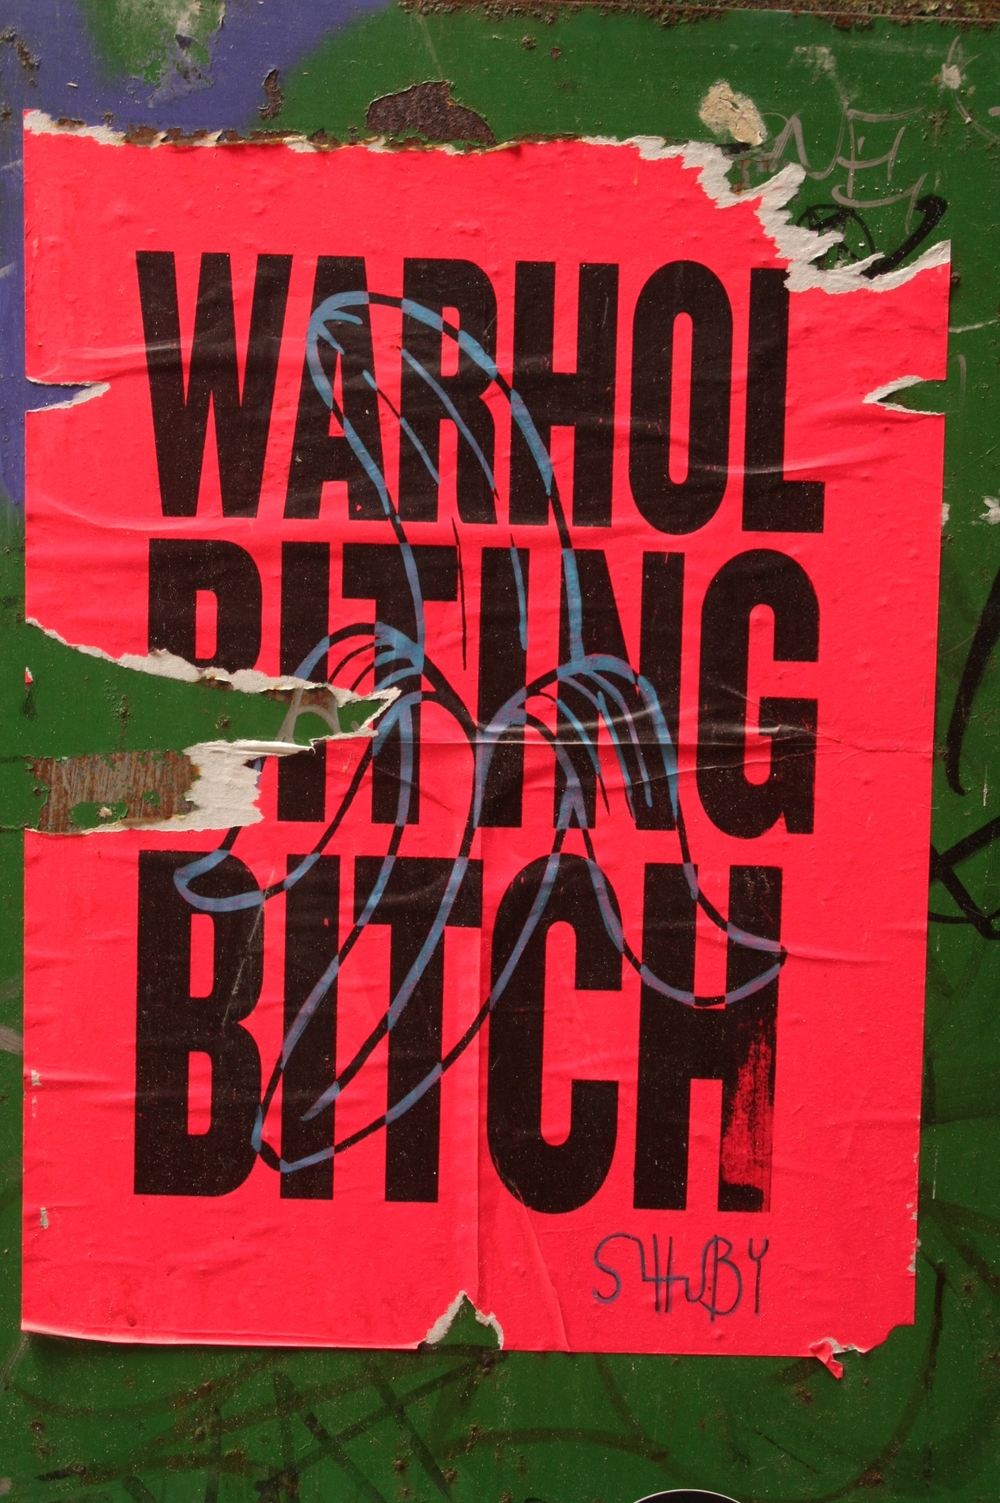 Warhol Bitch